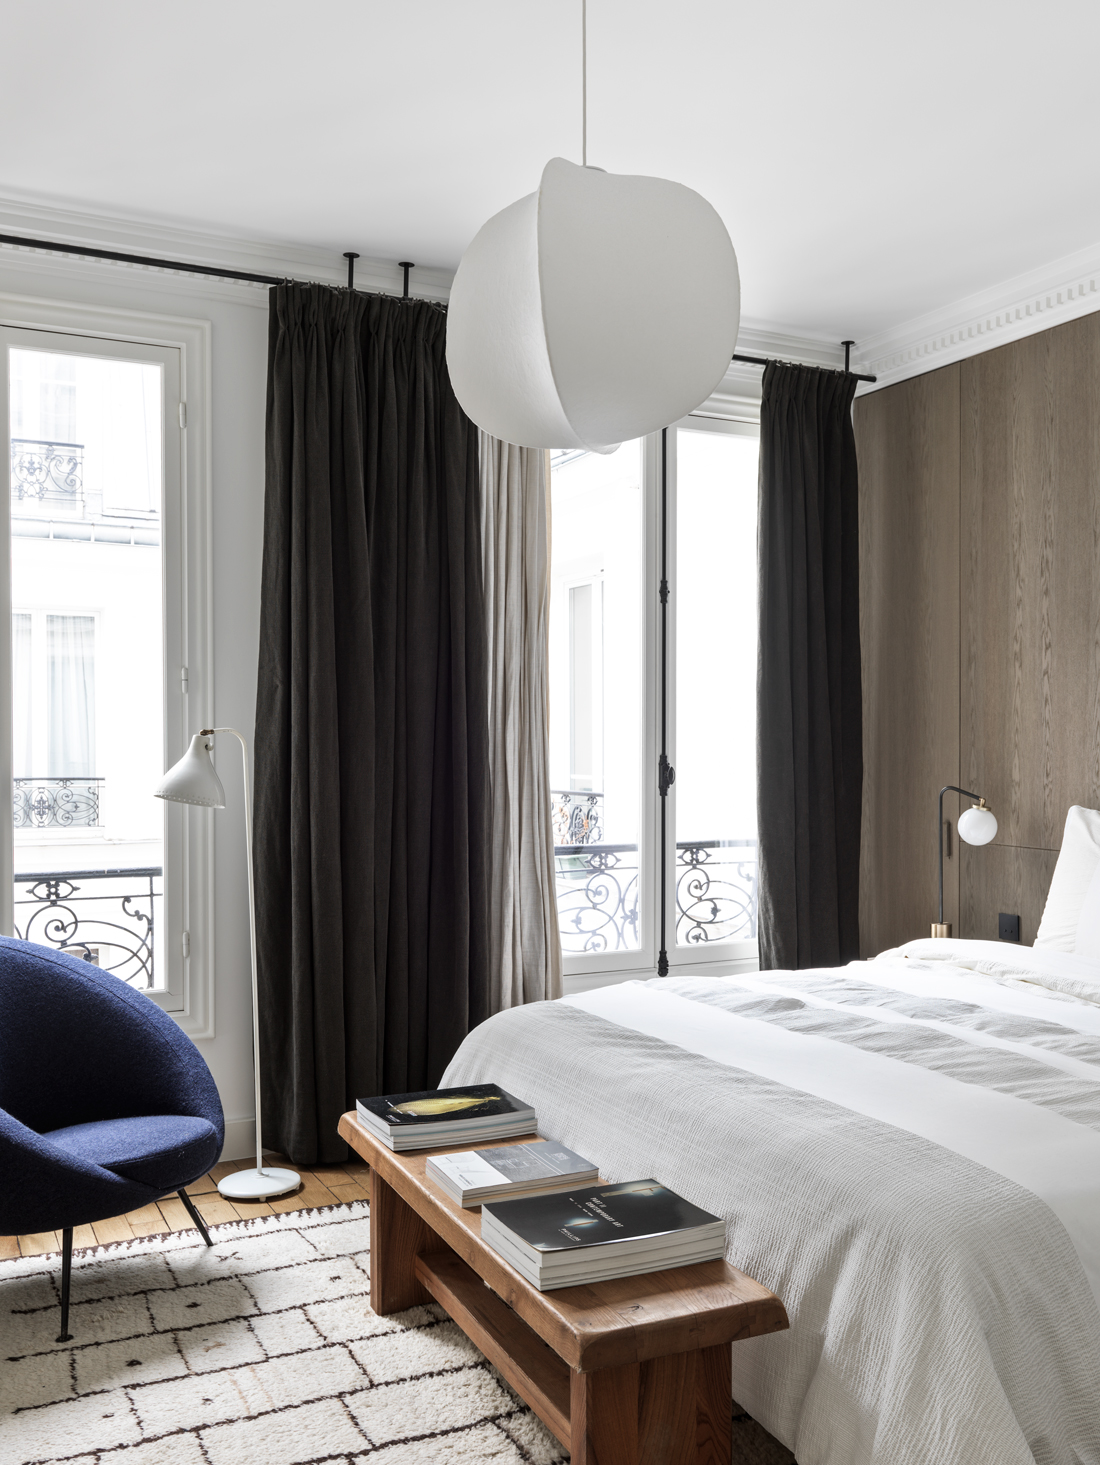 Paris Apartment by Nicolas Schuybroek Architects